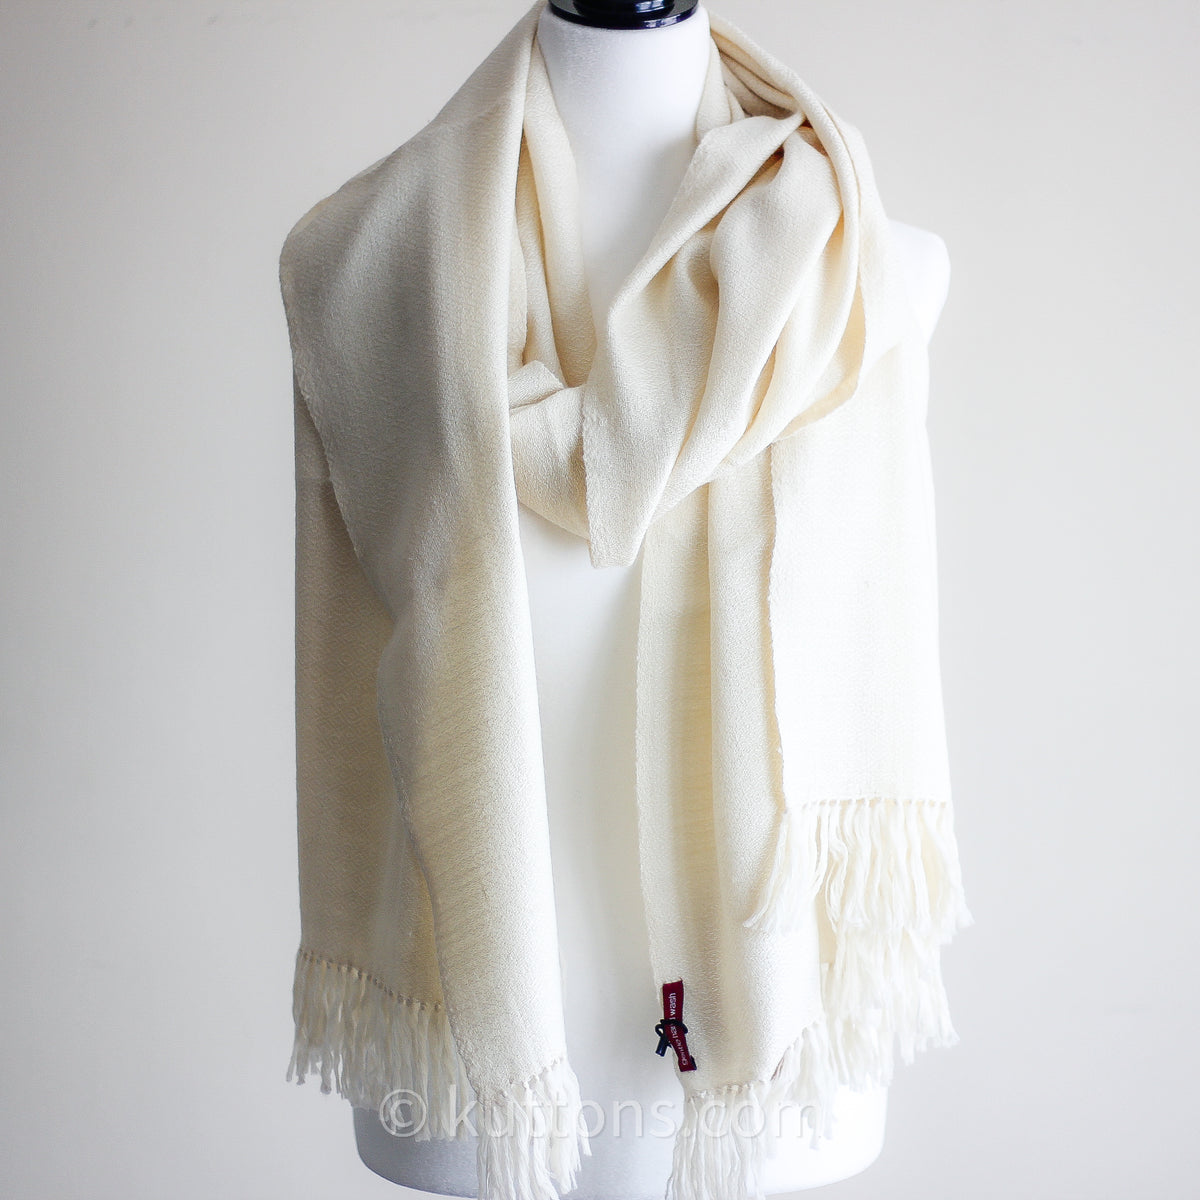 Handwoven Eri (Peaceful) Silk & Merino Wool Shawl - Soft, Cozy, Lightweight Wrap | Cream, 24x84"